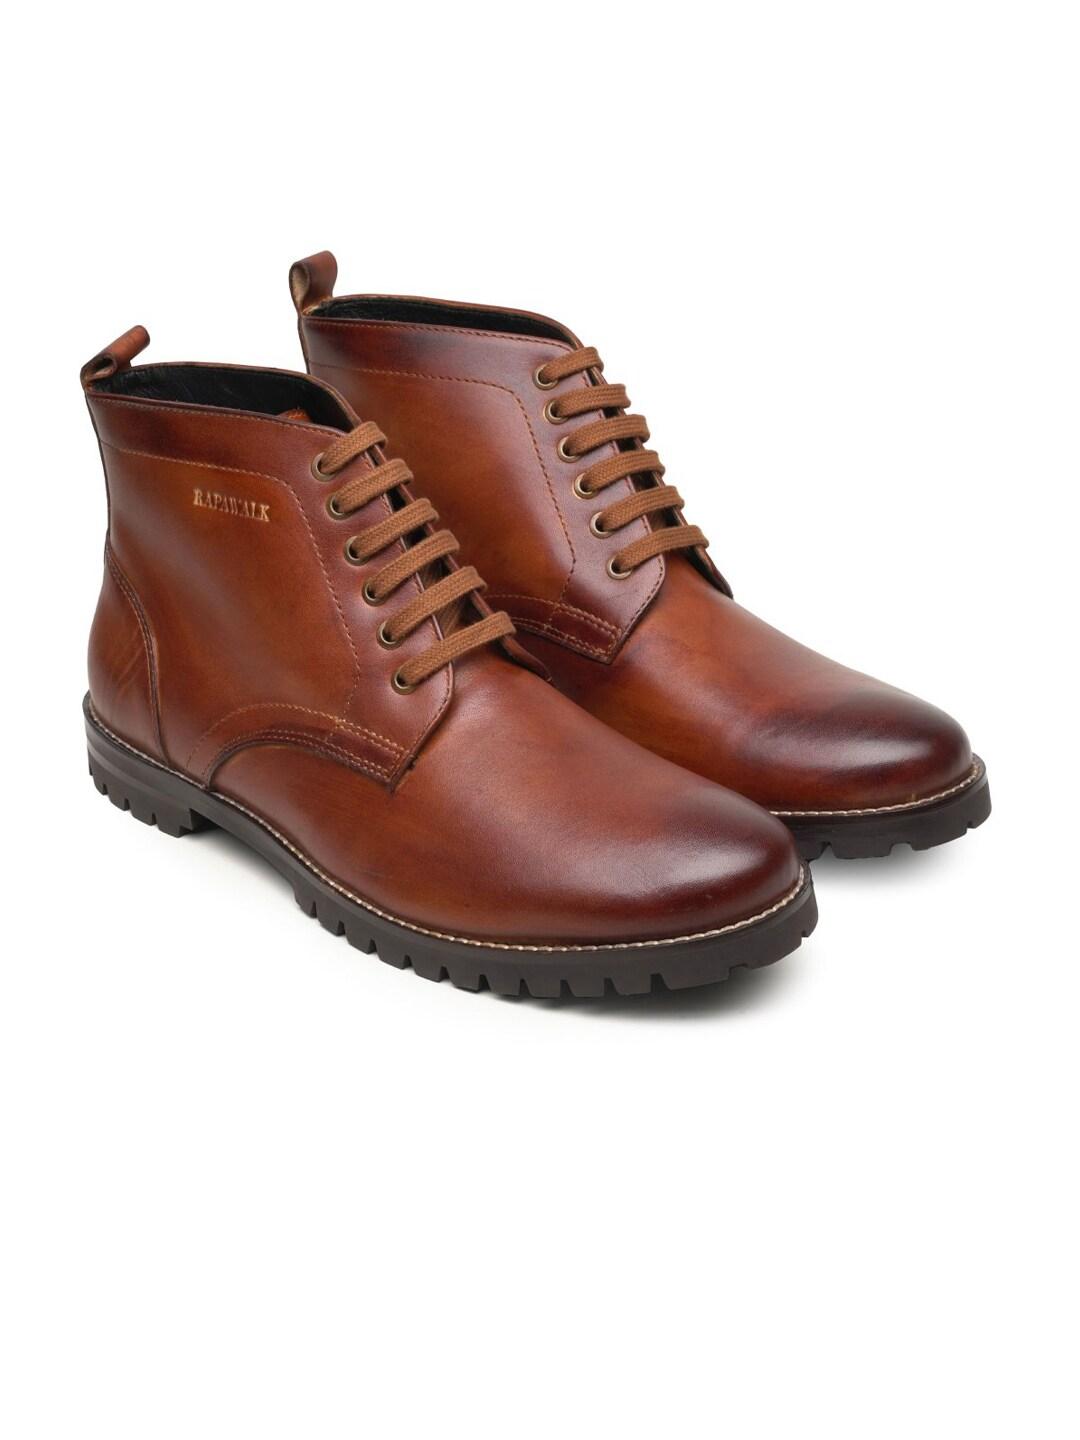 RAPAWALK Men Mid Top Leather Regular Boots